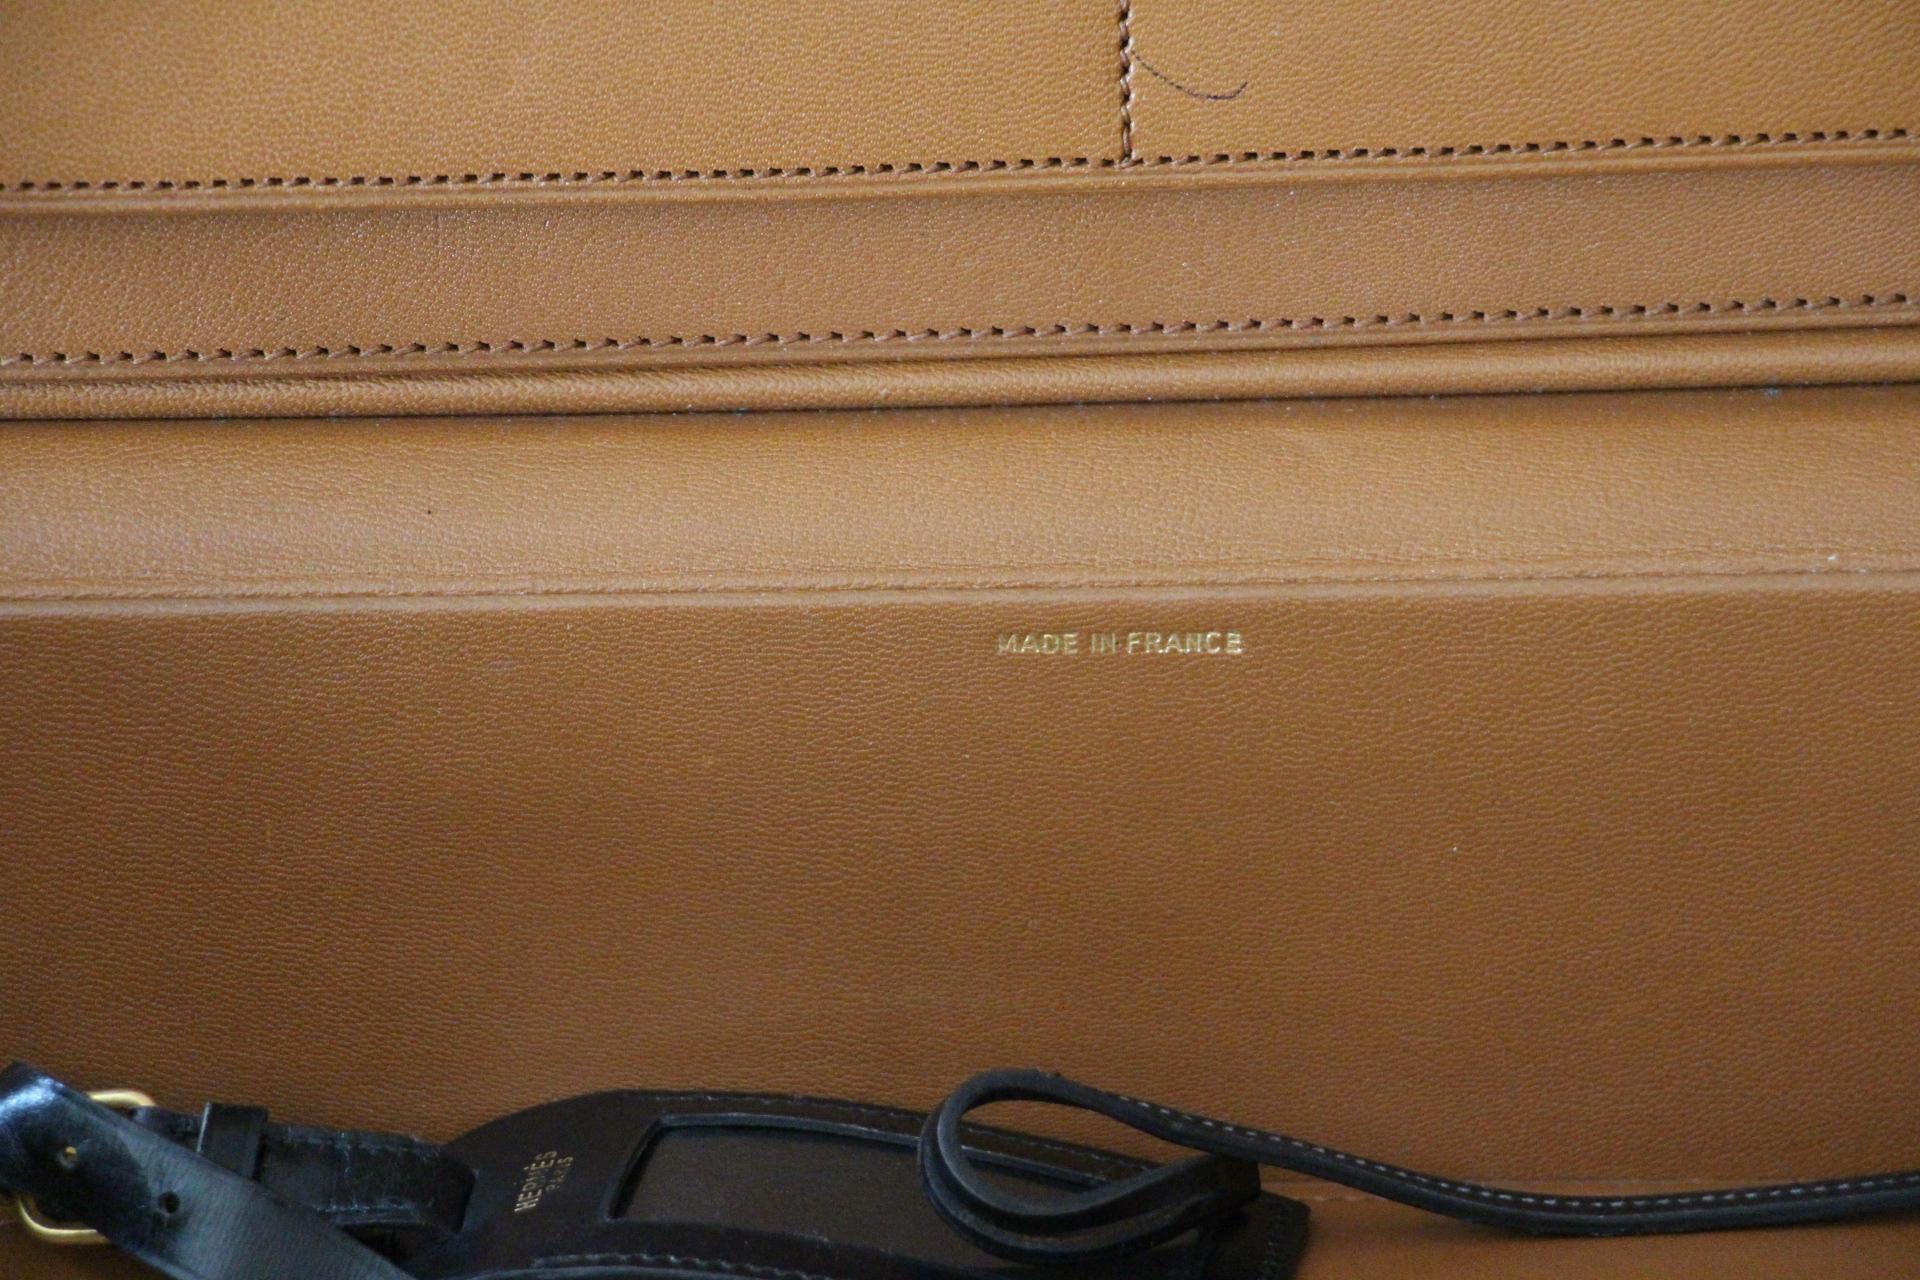 Hermès Black Leather Briefcase, Hermes Attache, Hermes Bag 13